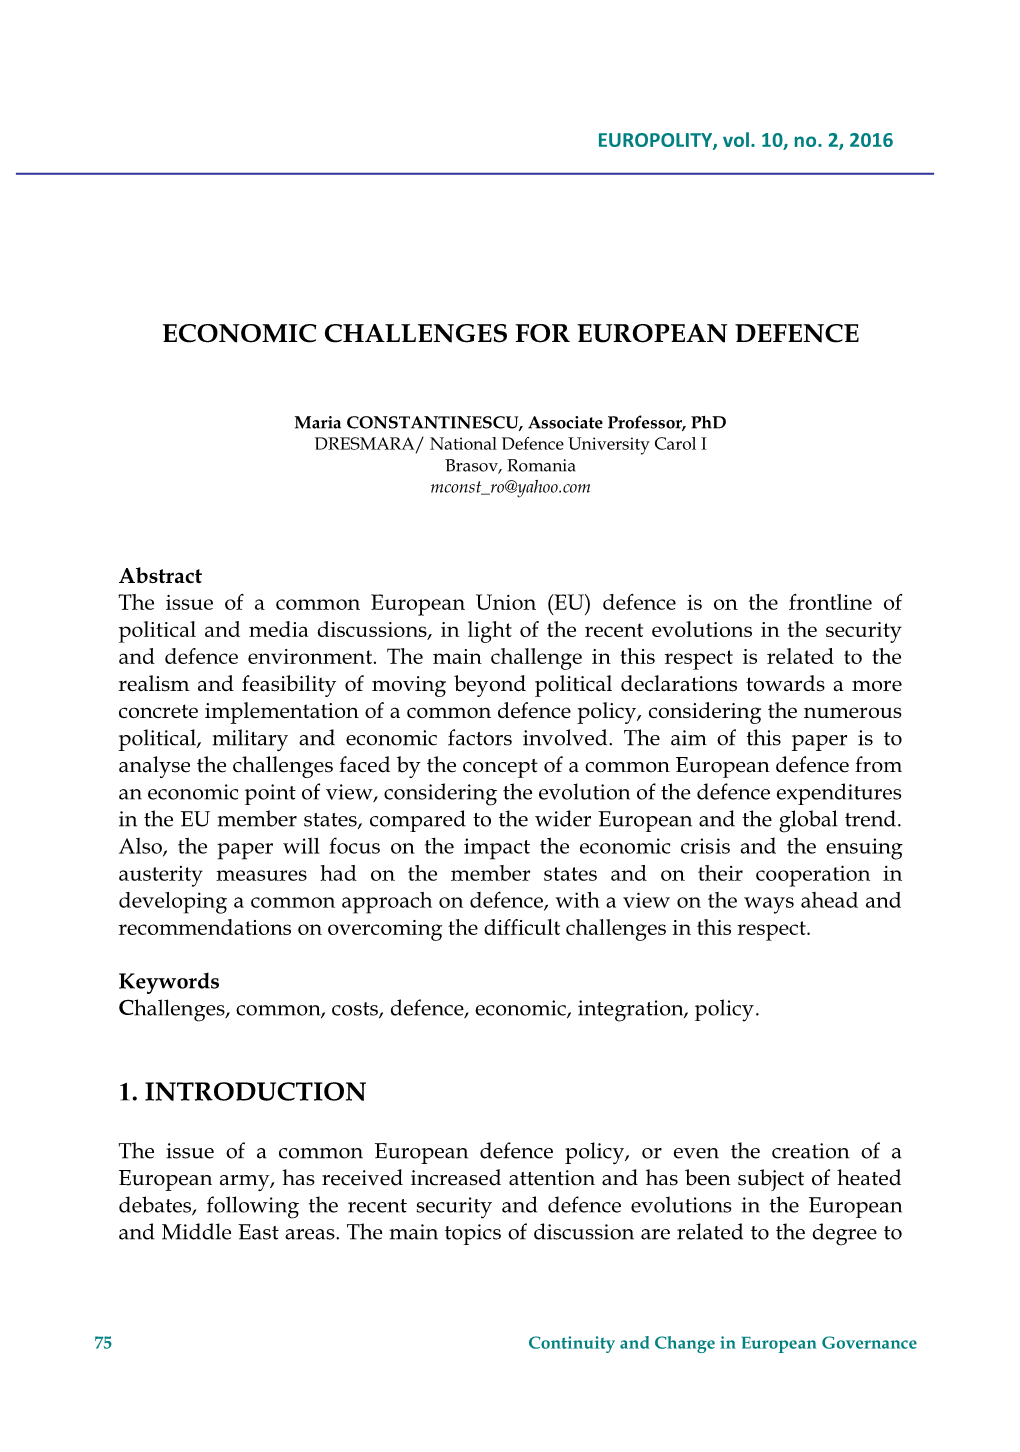 Economic Challenges for European Defence 1